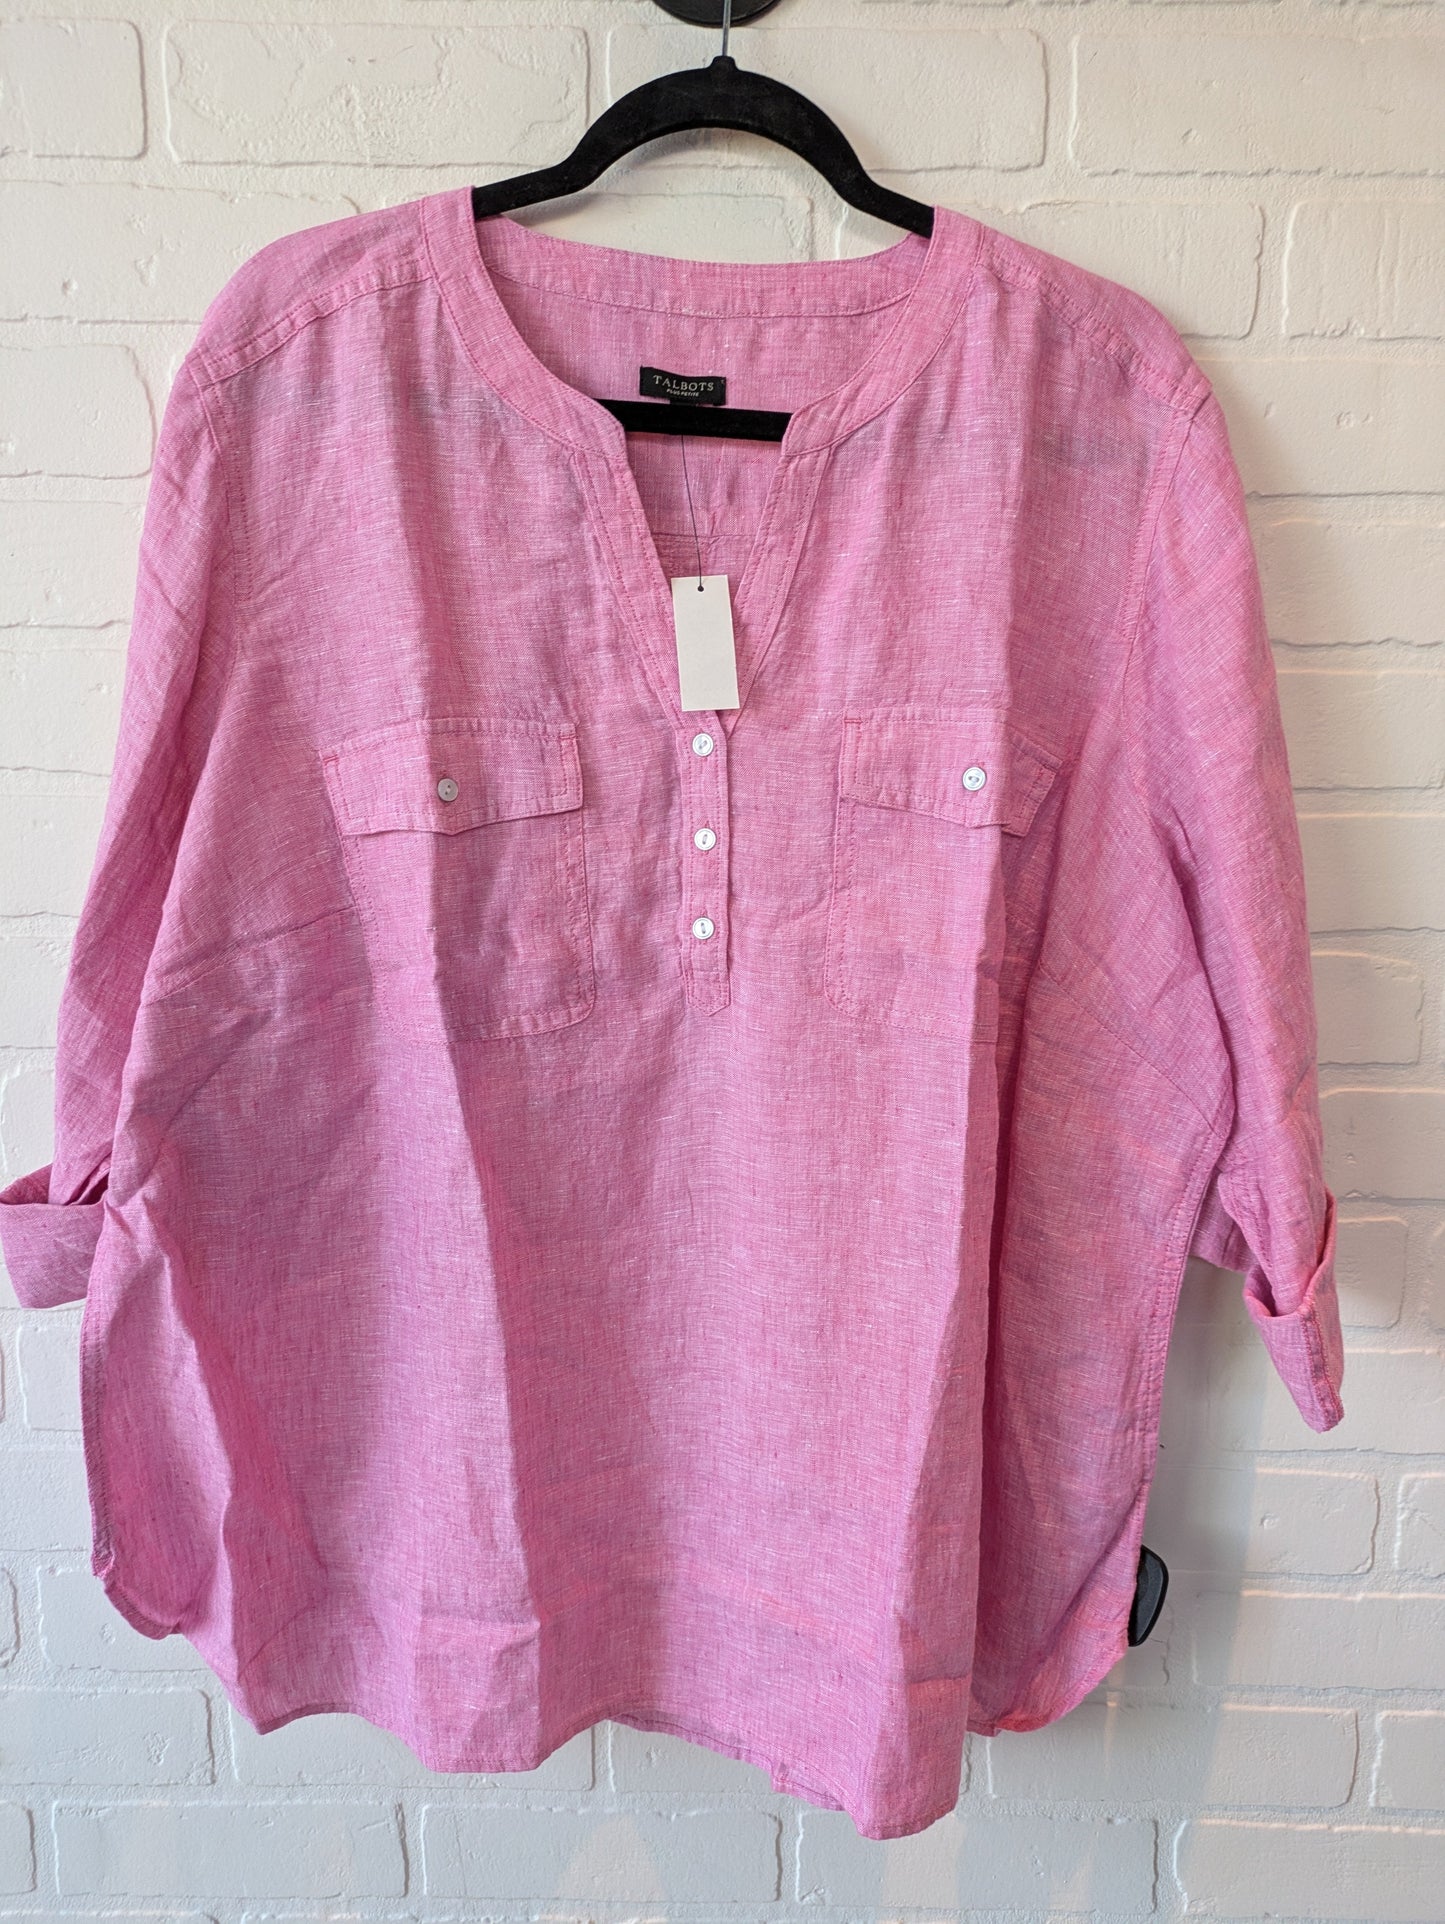 Pink Blouse 3/4 Sleeve Talbots, Size 3x